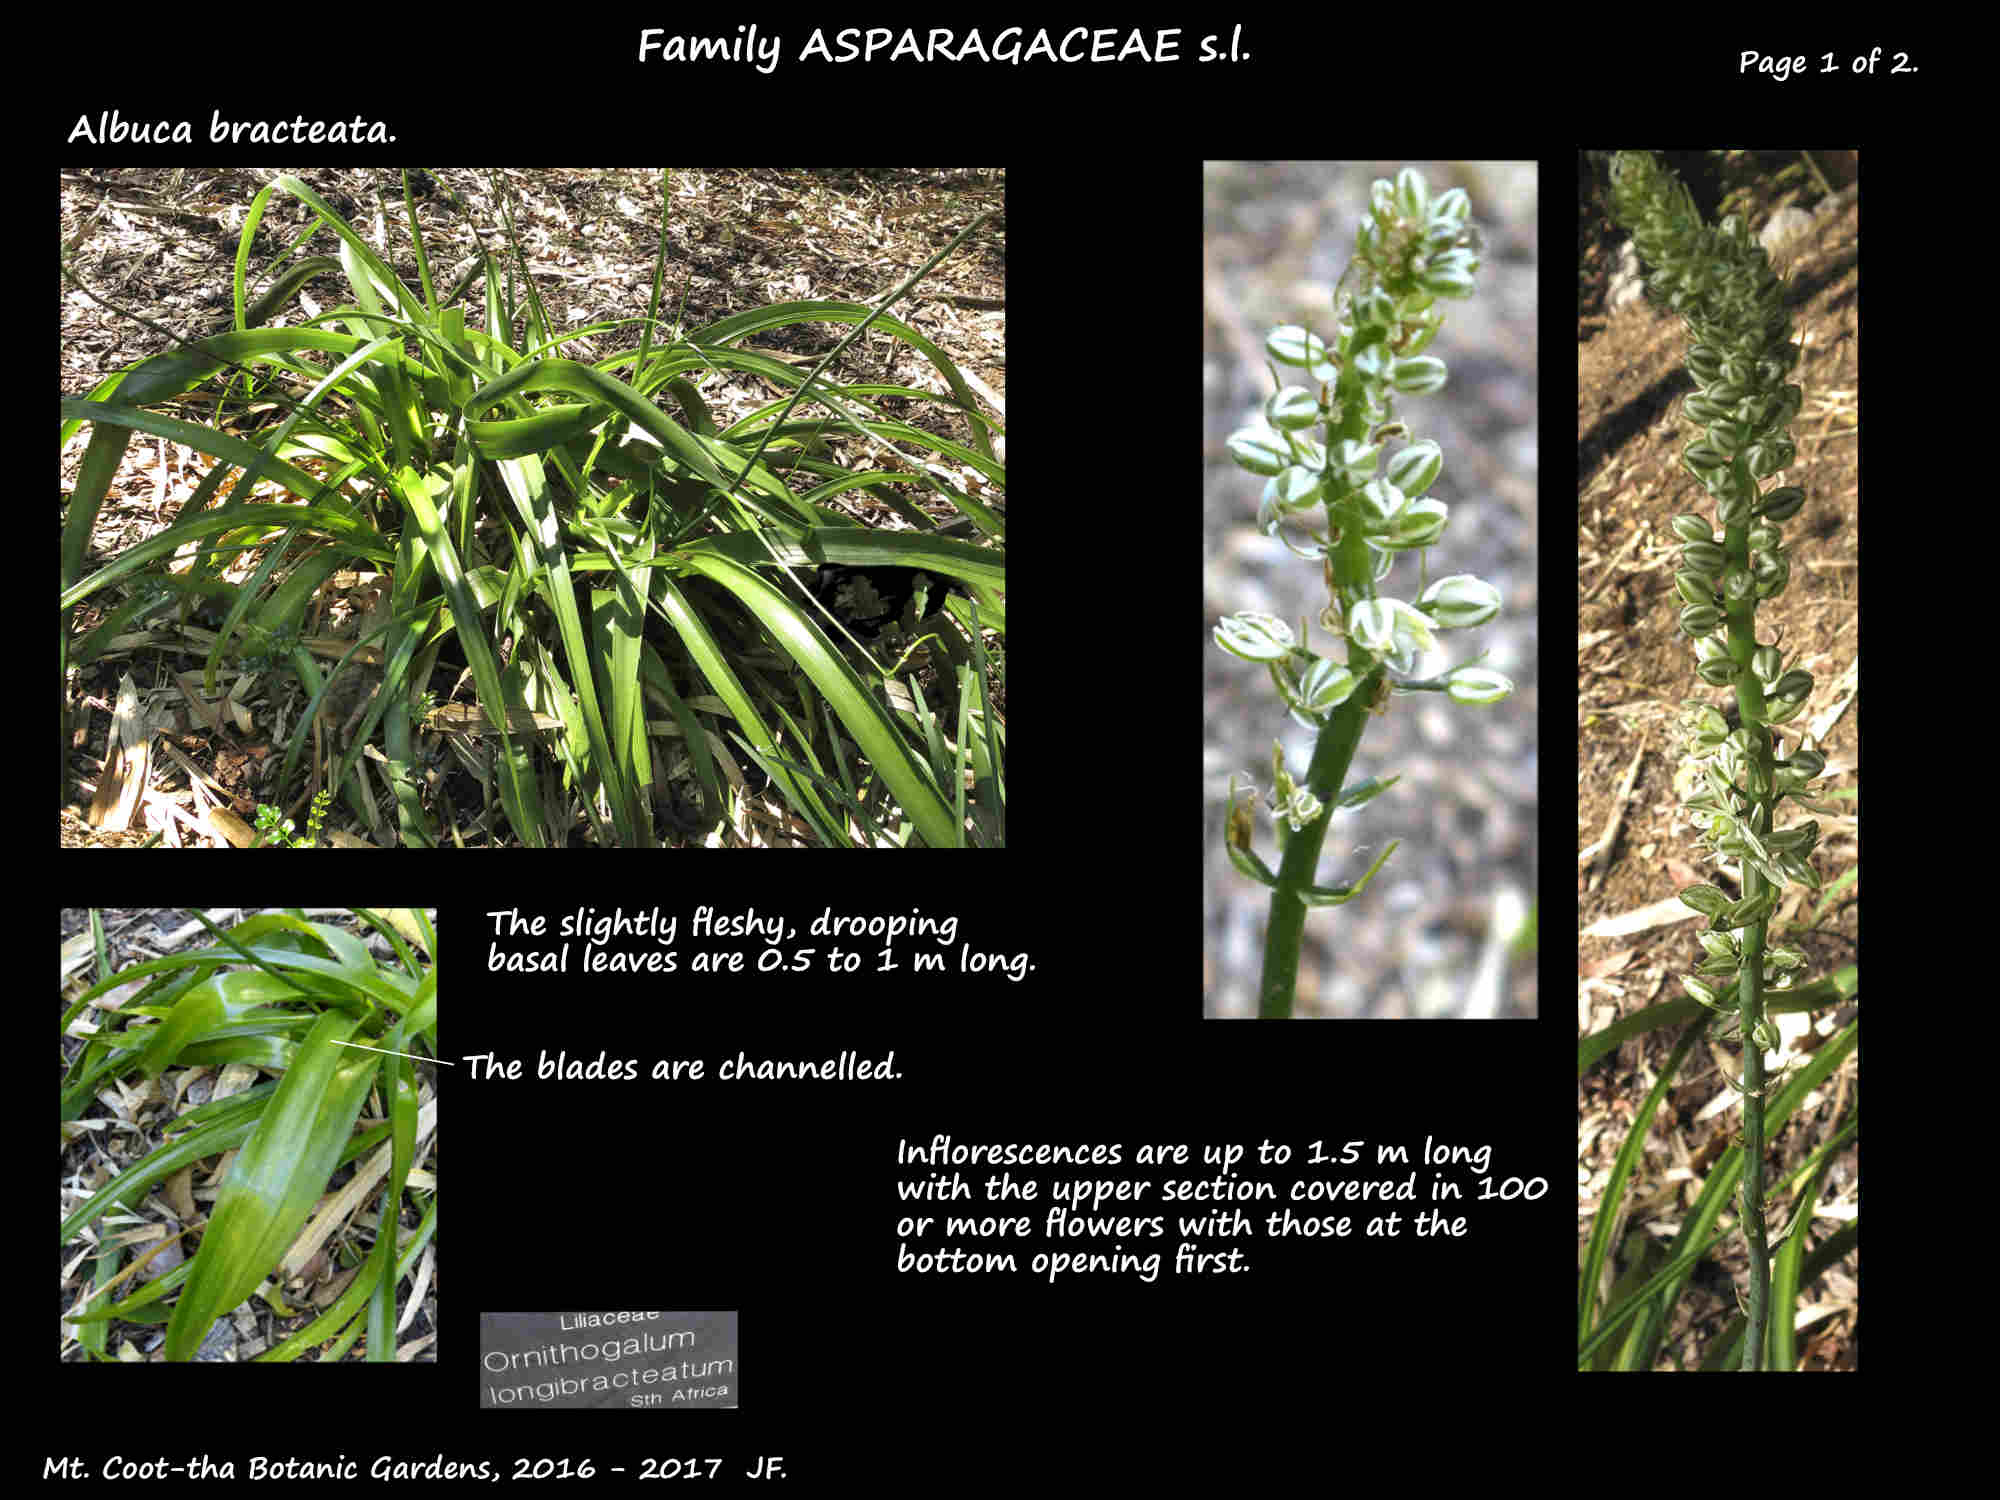 1 Albuca bracteata plants